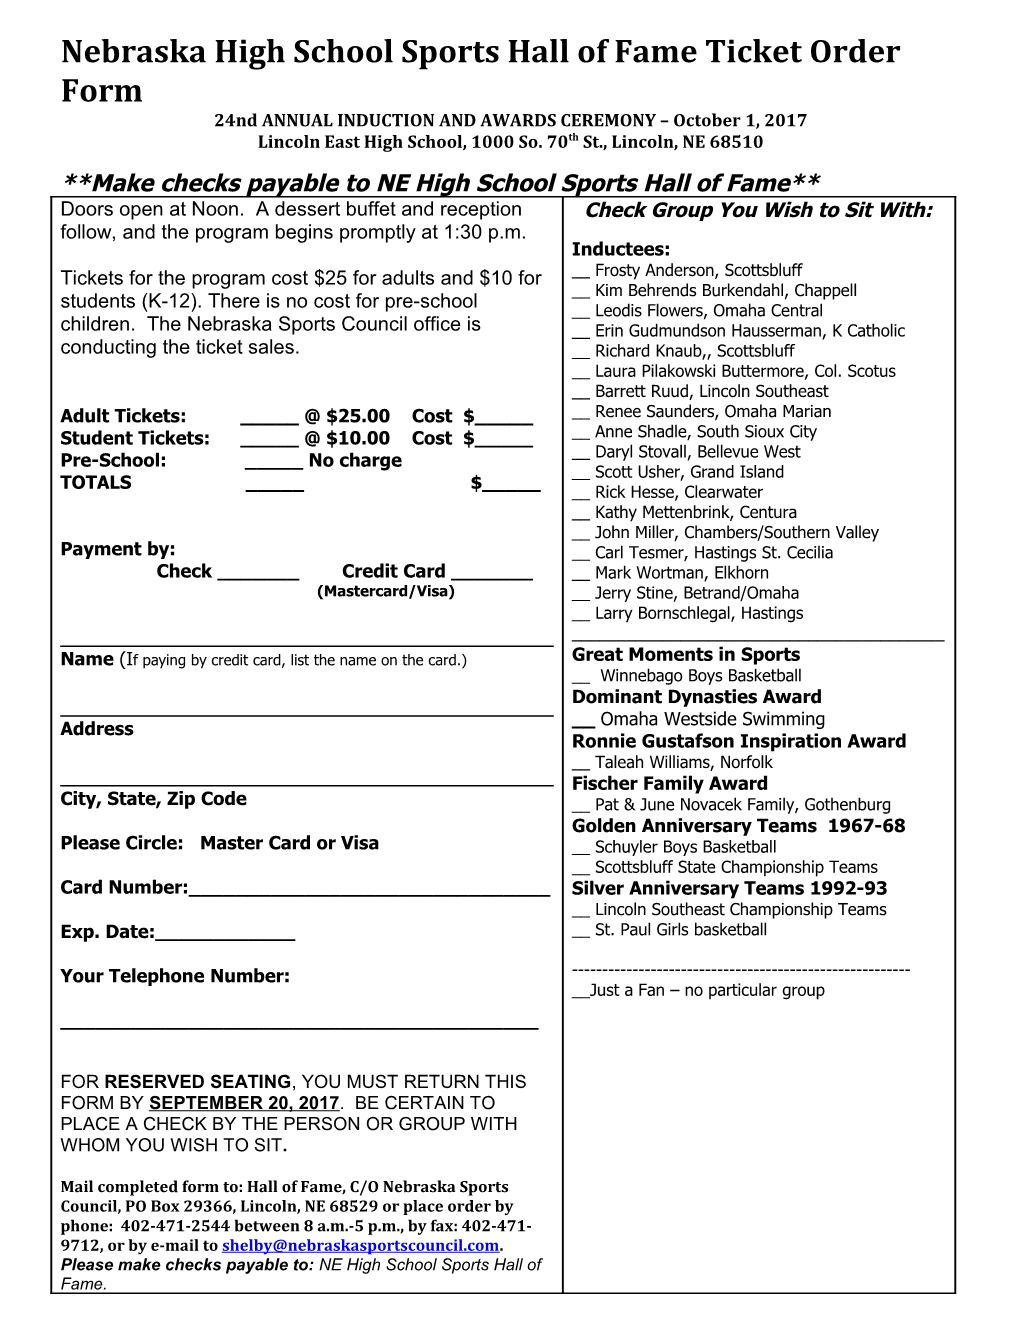 Nebraska High School Sports Hall of Fame Ticket Order Form